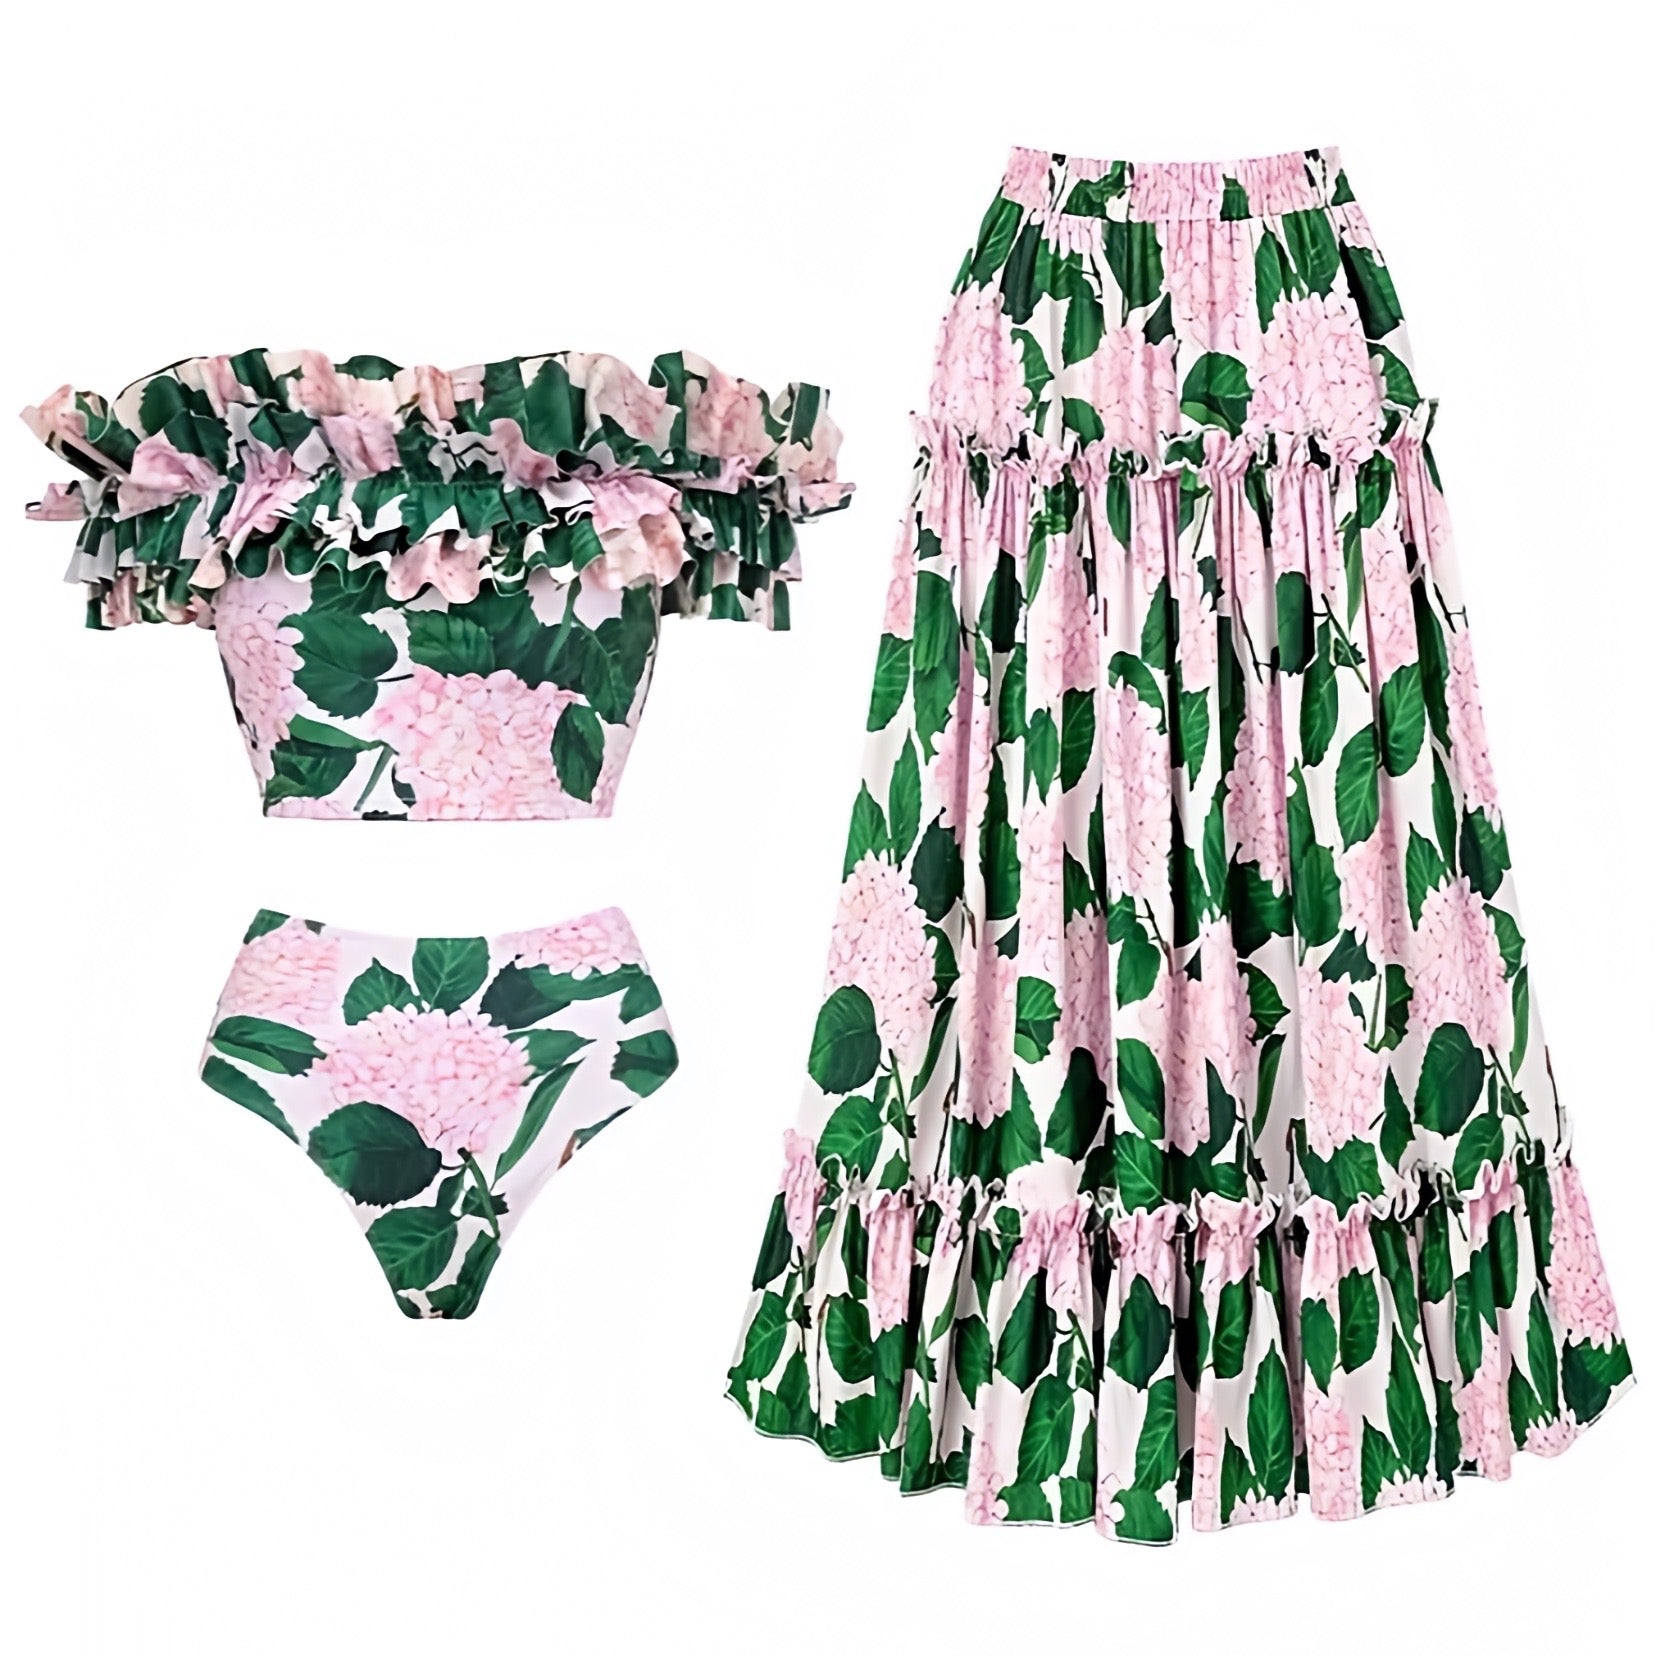 floral-print-light-pink-green-white-multi-color-hydrangea-flower-patterned-layered-ruffle-trim-bandeau-strapless-sleeveless-tube-wireless-push-up-cheeky-thong-boho-bohemian-2-piece-bikini-set-top-and-bottoms-swimsuit-swimwear-bathing-suit-with-midi-long-maxi-cover-skirt-set-women-ladies-teens-tweens-chic-trendy-spring-2024-summer-elegant-feminine-classy-classic-preppy-style-grand-millennial-beach-wear-revolve-altard-state-loveshackfancy-frankies-bikinis-blackbough-kulakinis-fillyboo-dupe